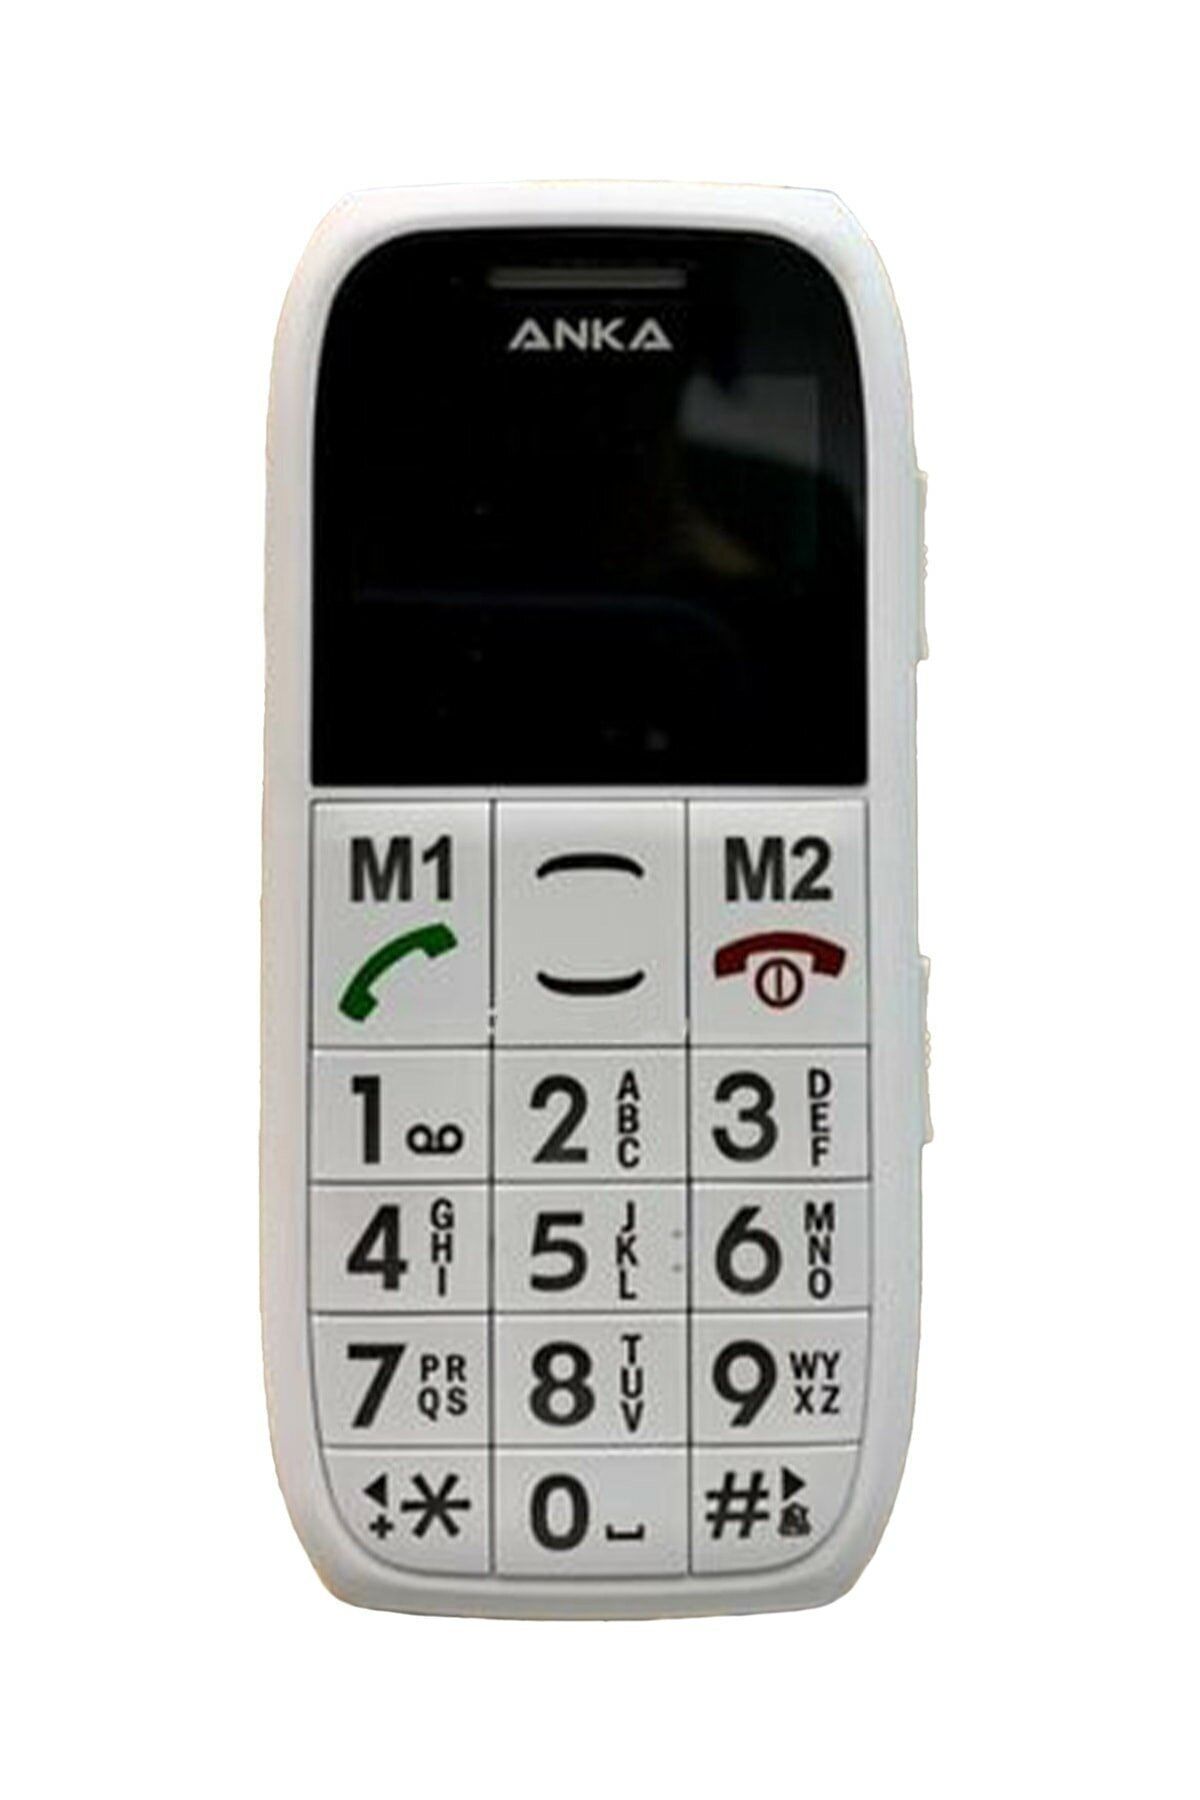 Anka M9 Tuşlu Cep Telefonu Kamerasız